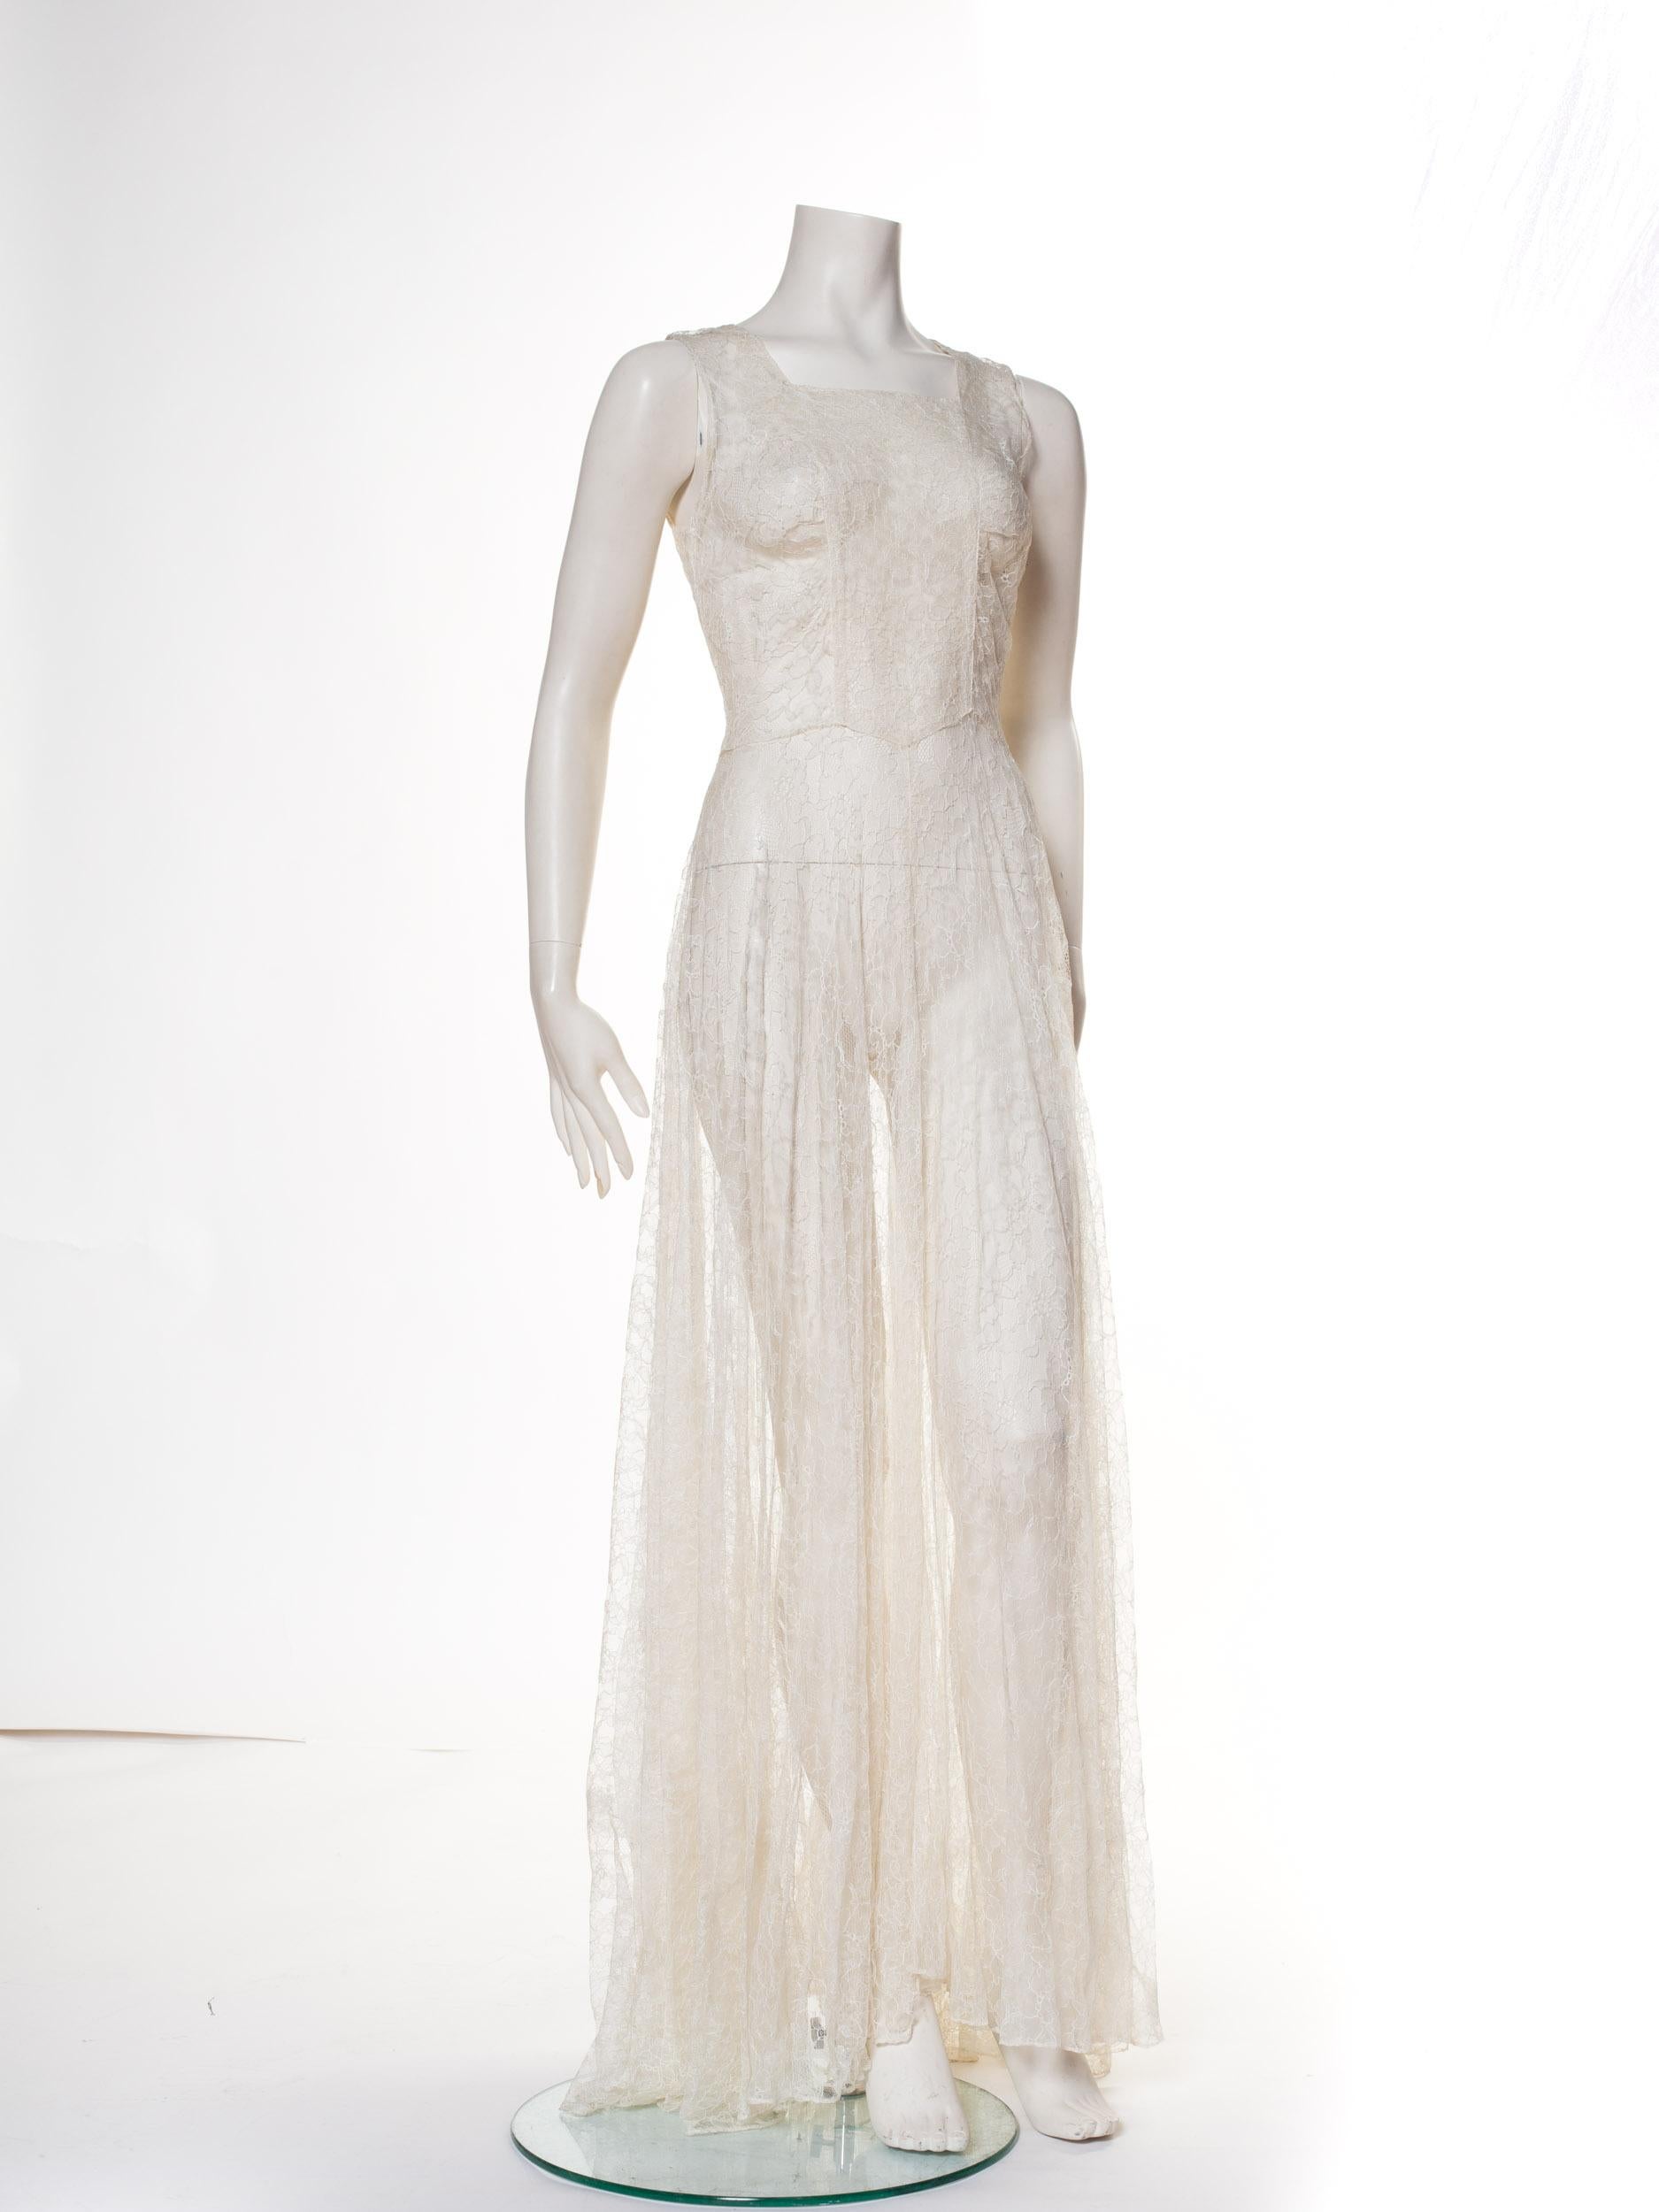 1930s Minimal White Lace Dress With Square Neckline (Weiß)